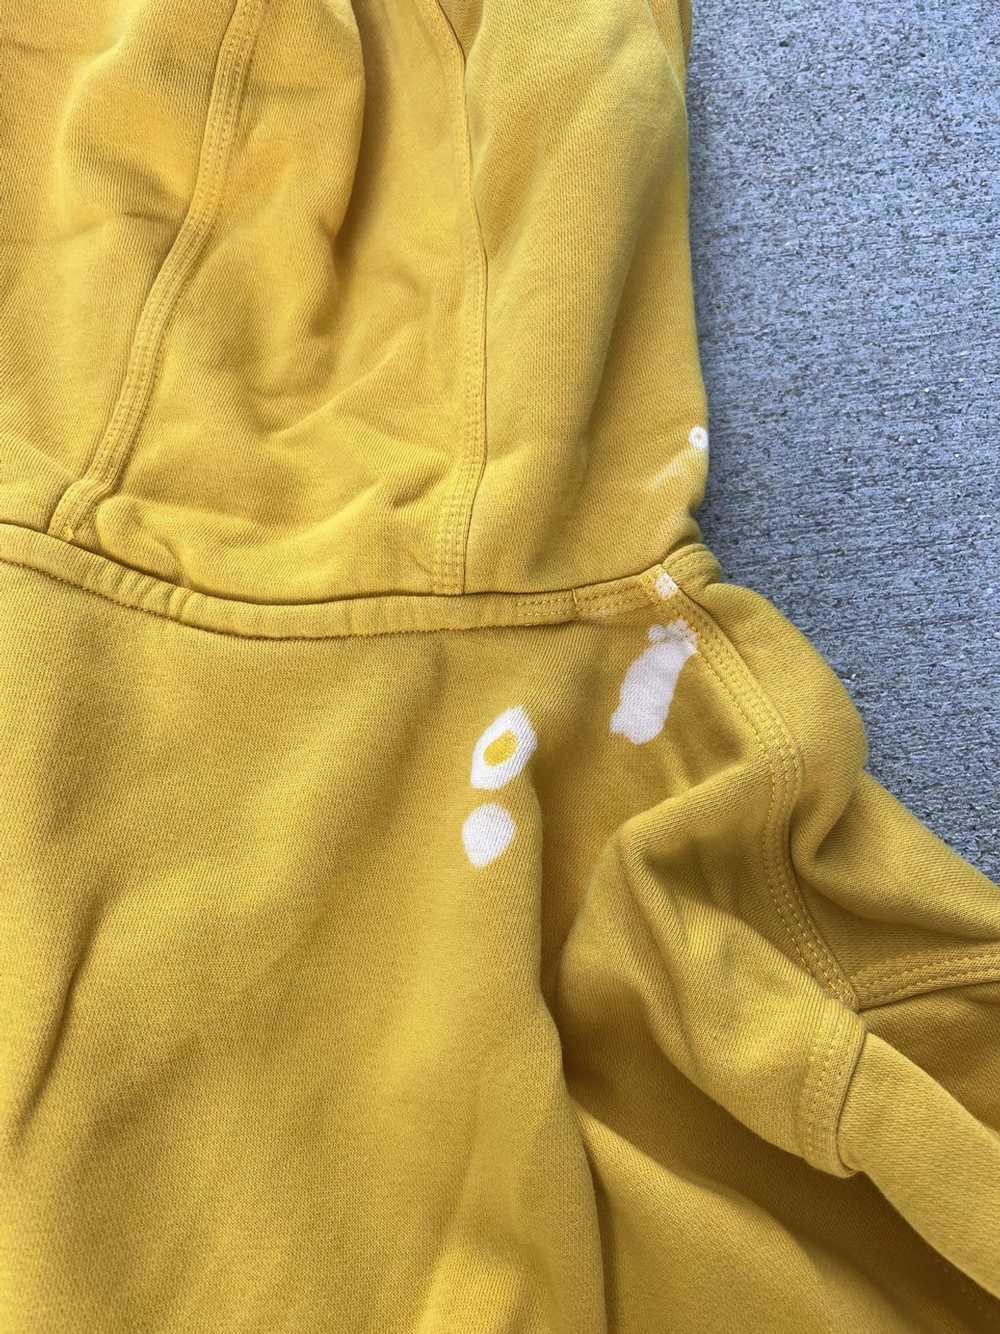 Nike Nike Acid Stained Yellow Hoodie - image 4